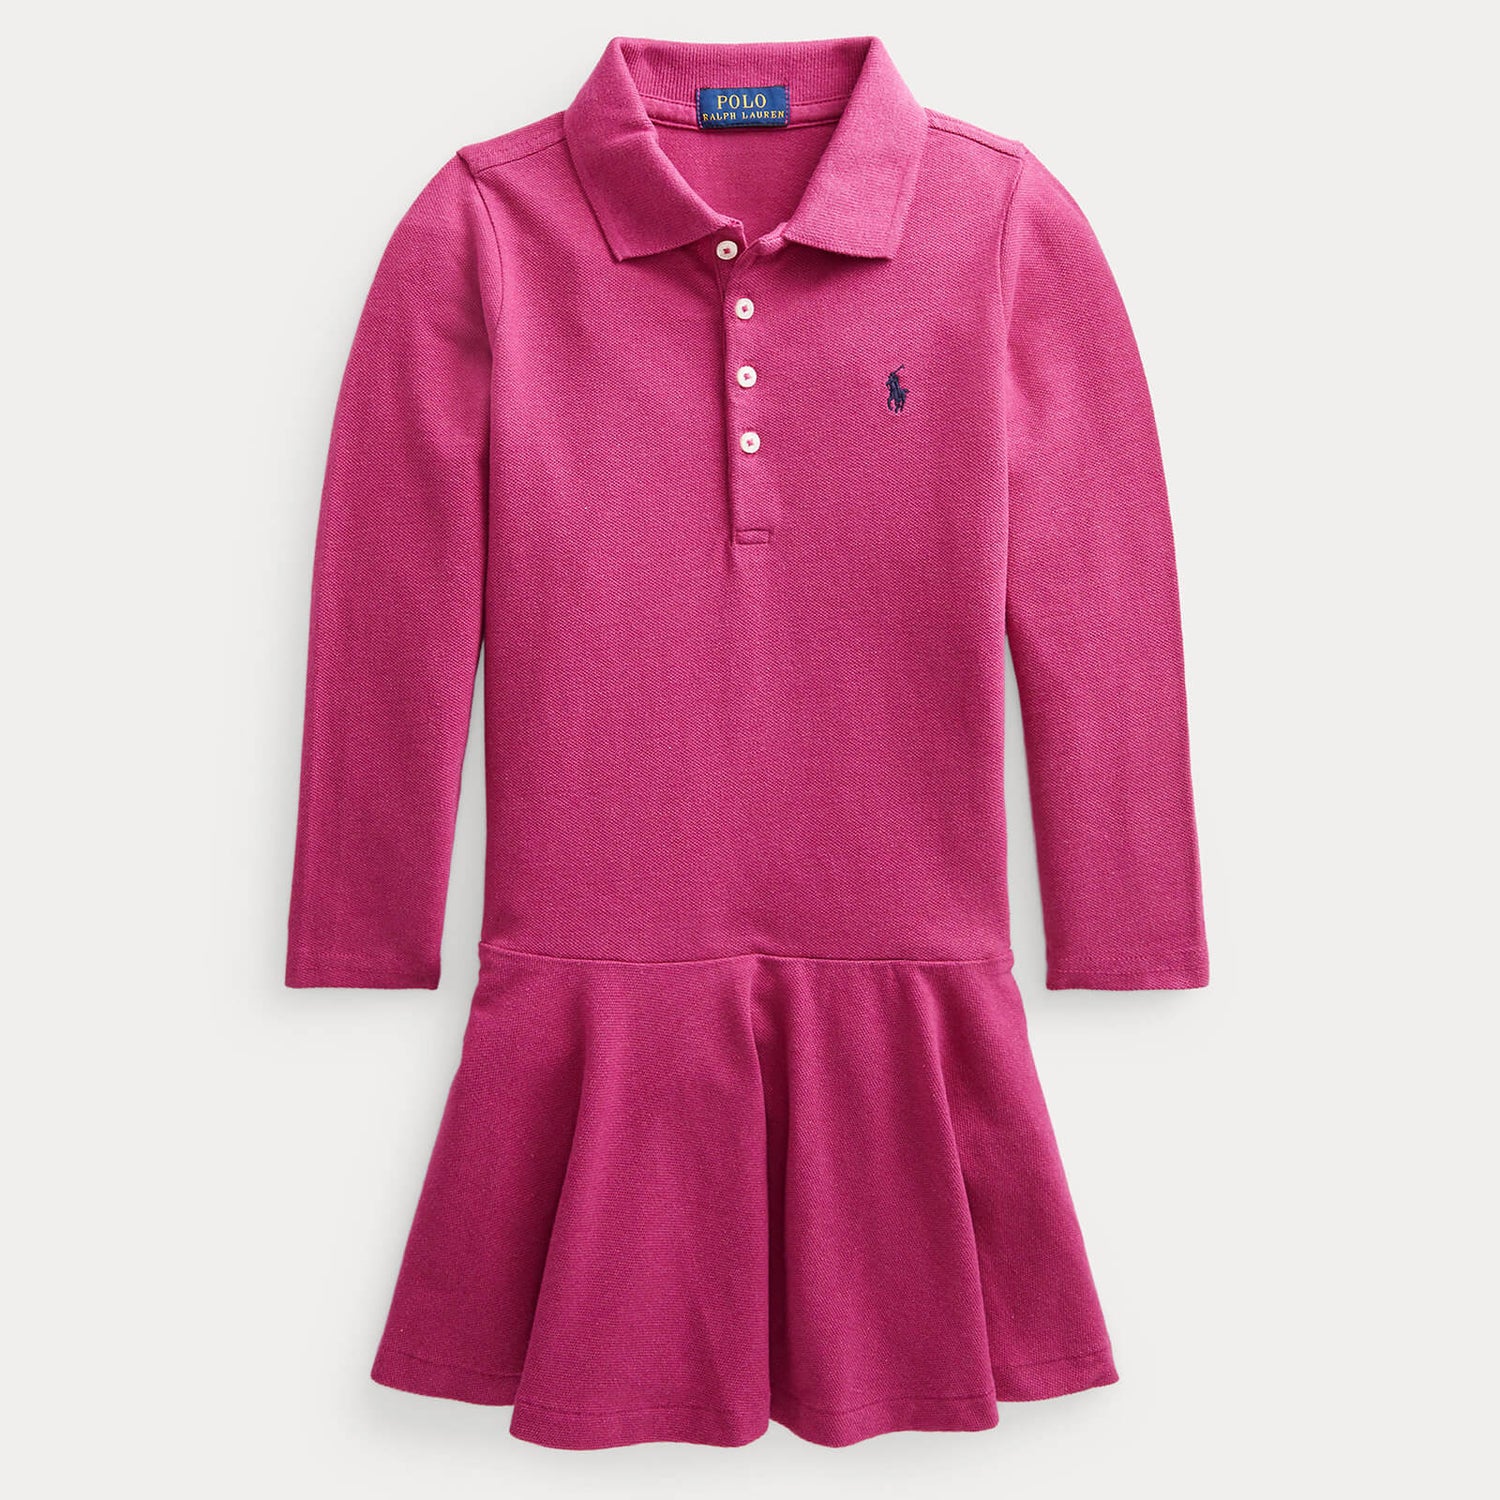 Ralph Lauren Girls' Polo Dress - Vibrant Pink Heather - 12-14 Years